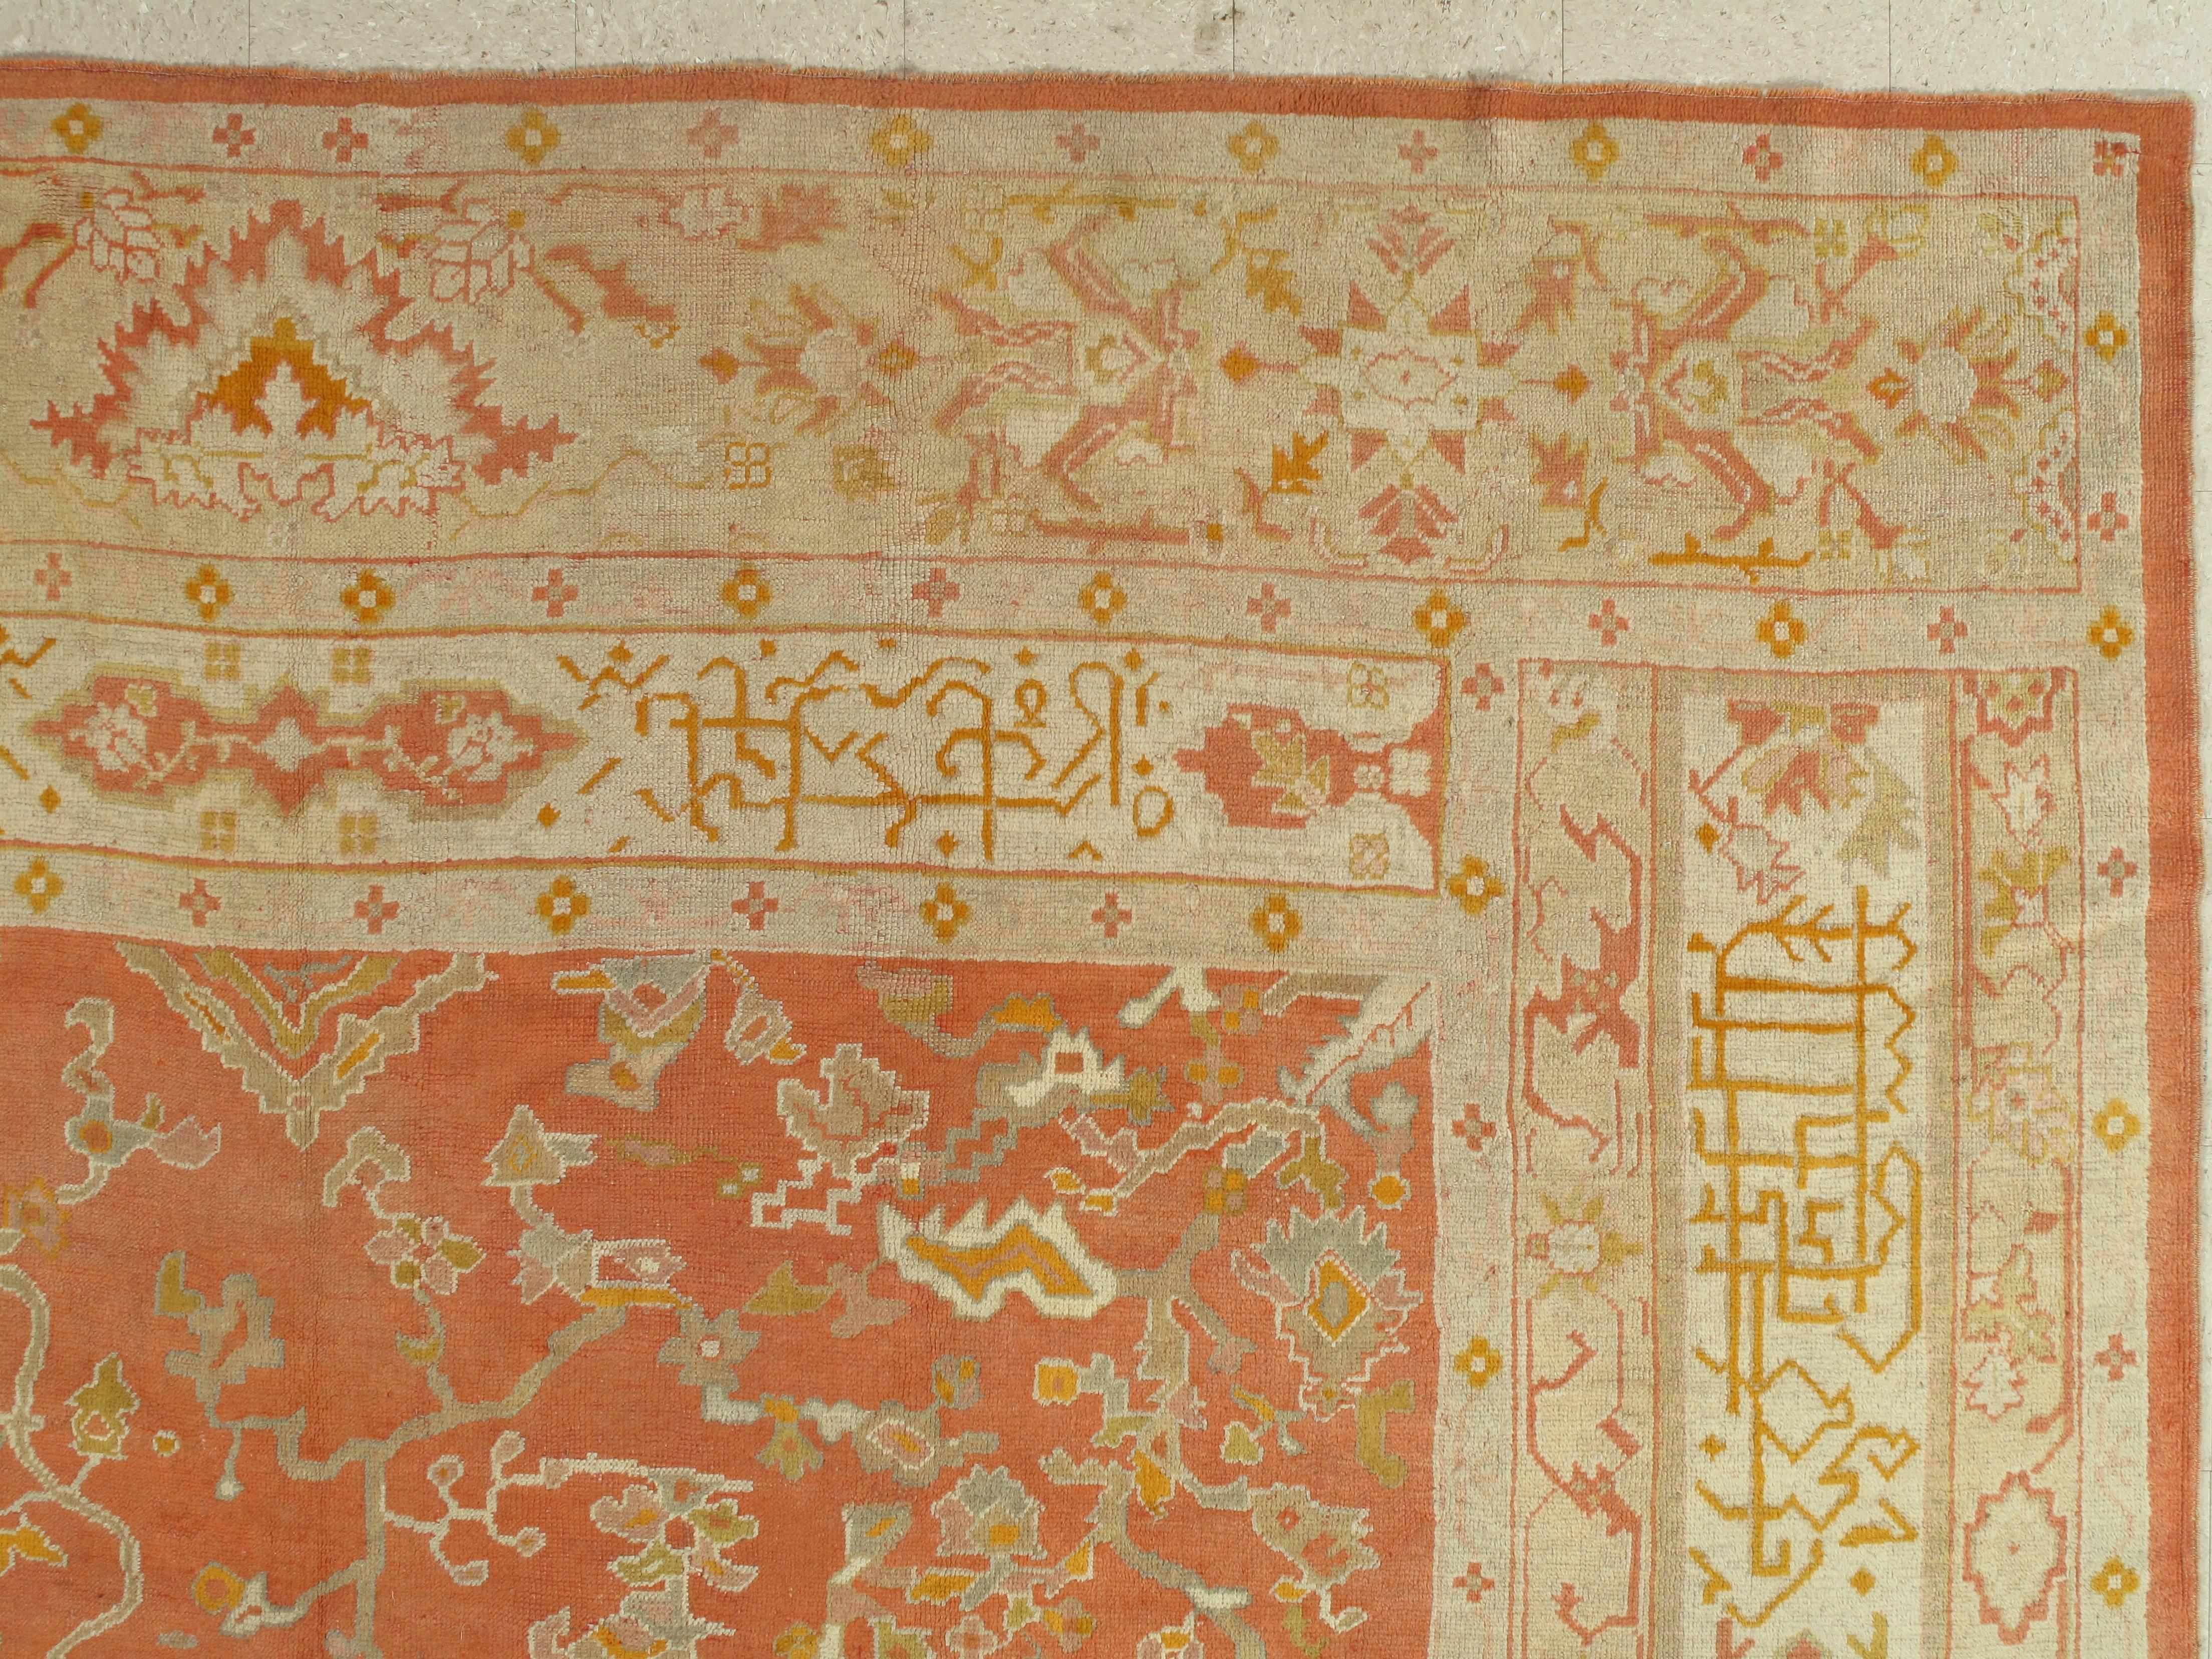 Hand-Knotted Antique Oushak Turkish Carpet, Handmade Coral, Ivory, Saffron